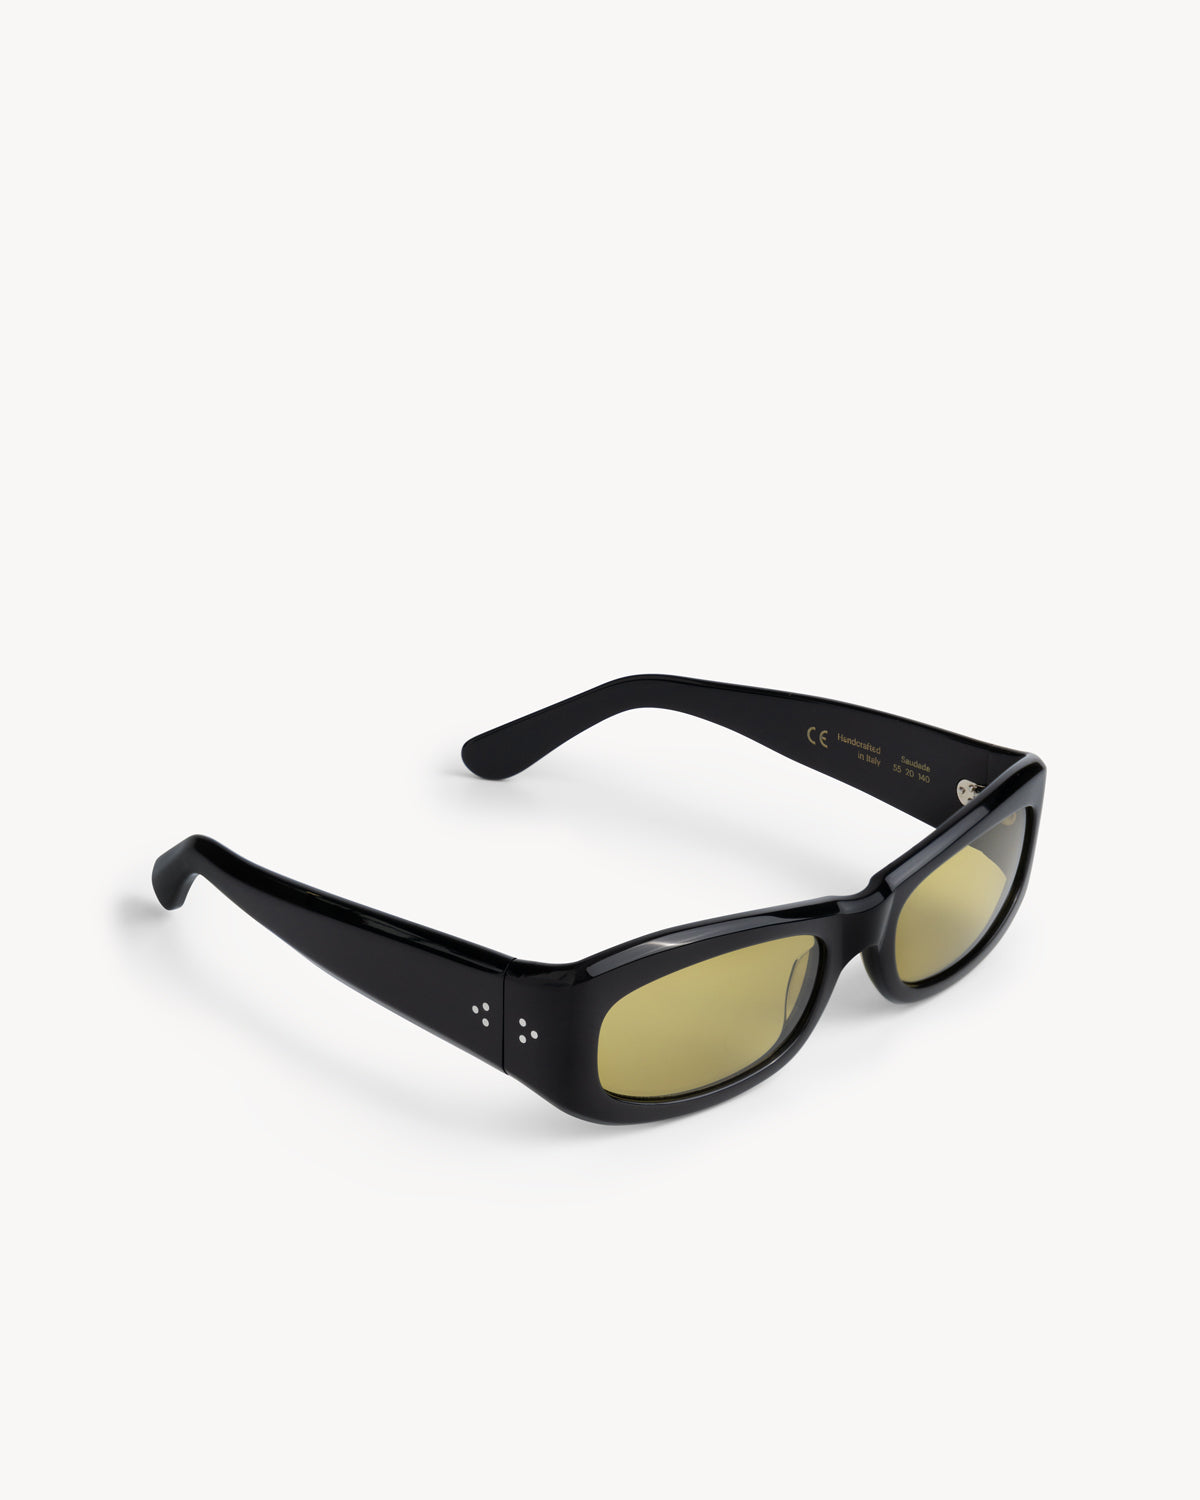 Port Tanger Saudade Sunglasses in Black Acetate and Warm Olive Lenses 2